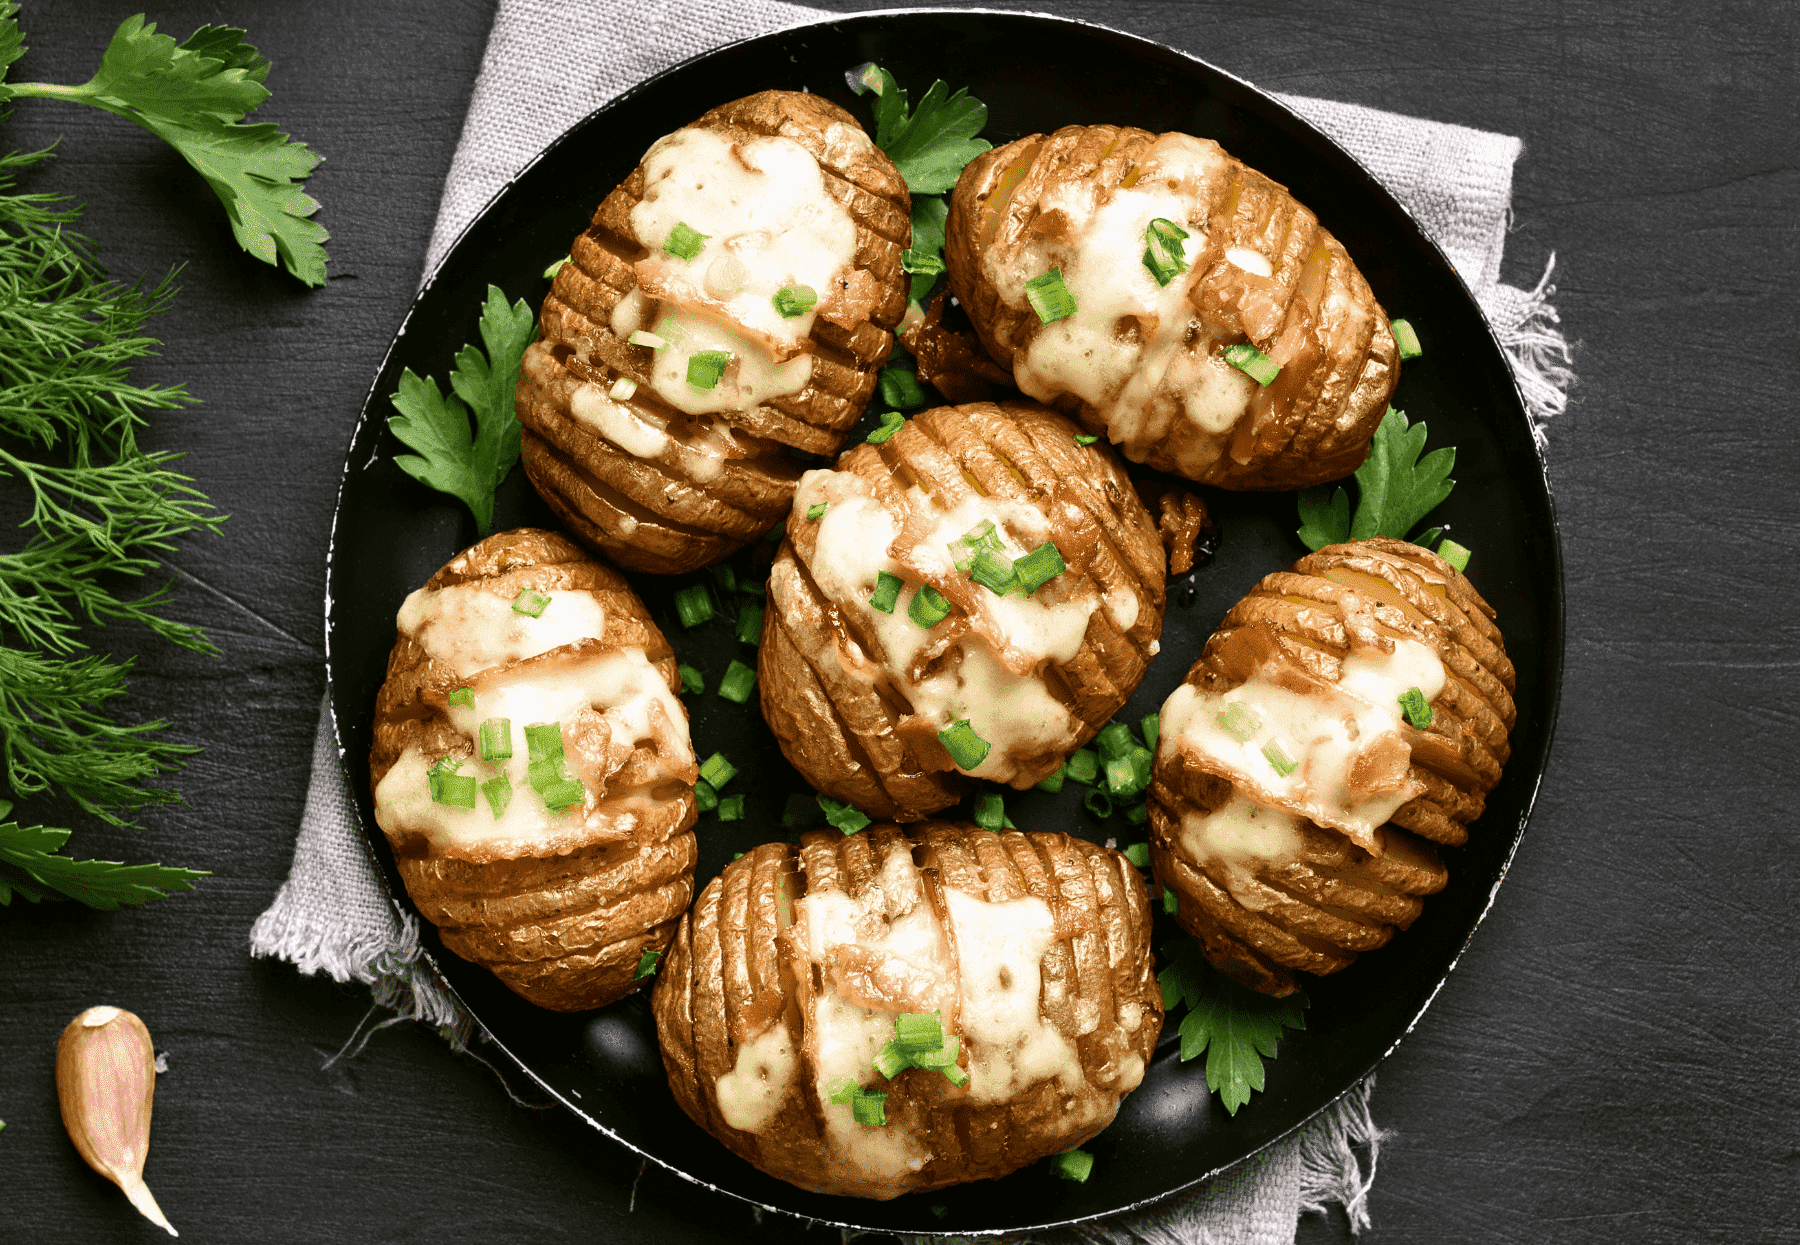 Arizona baked potatoes